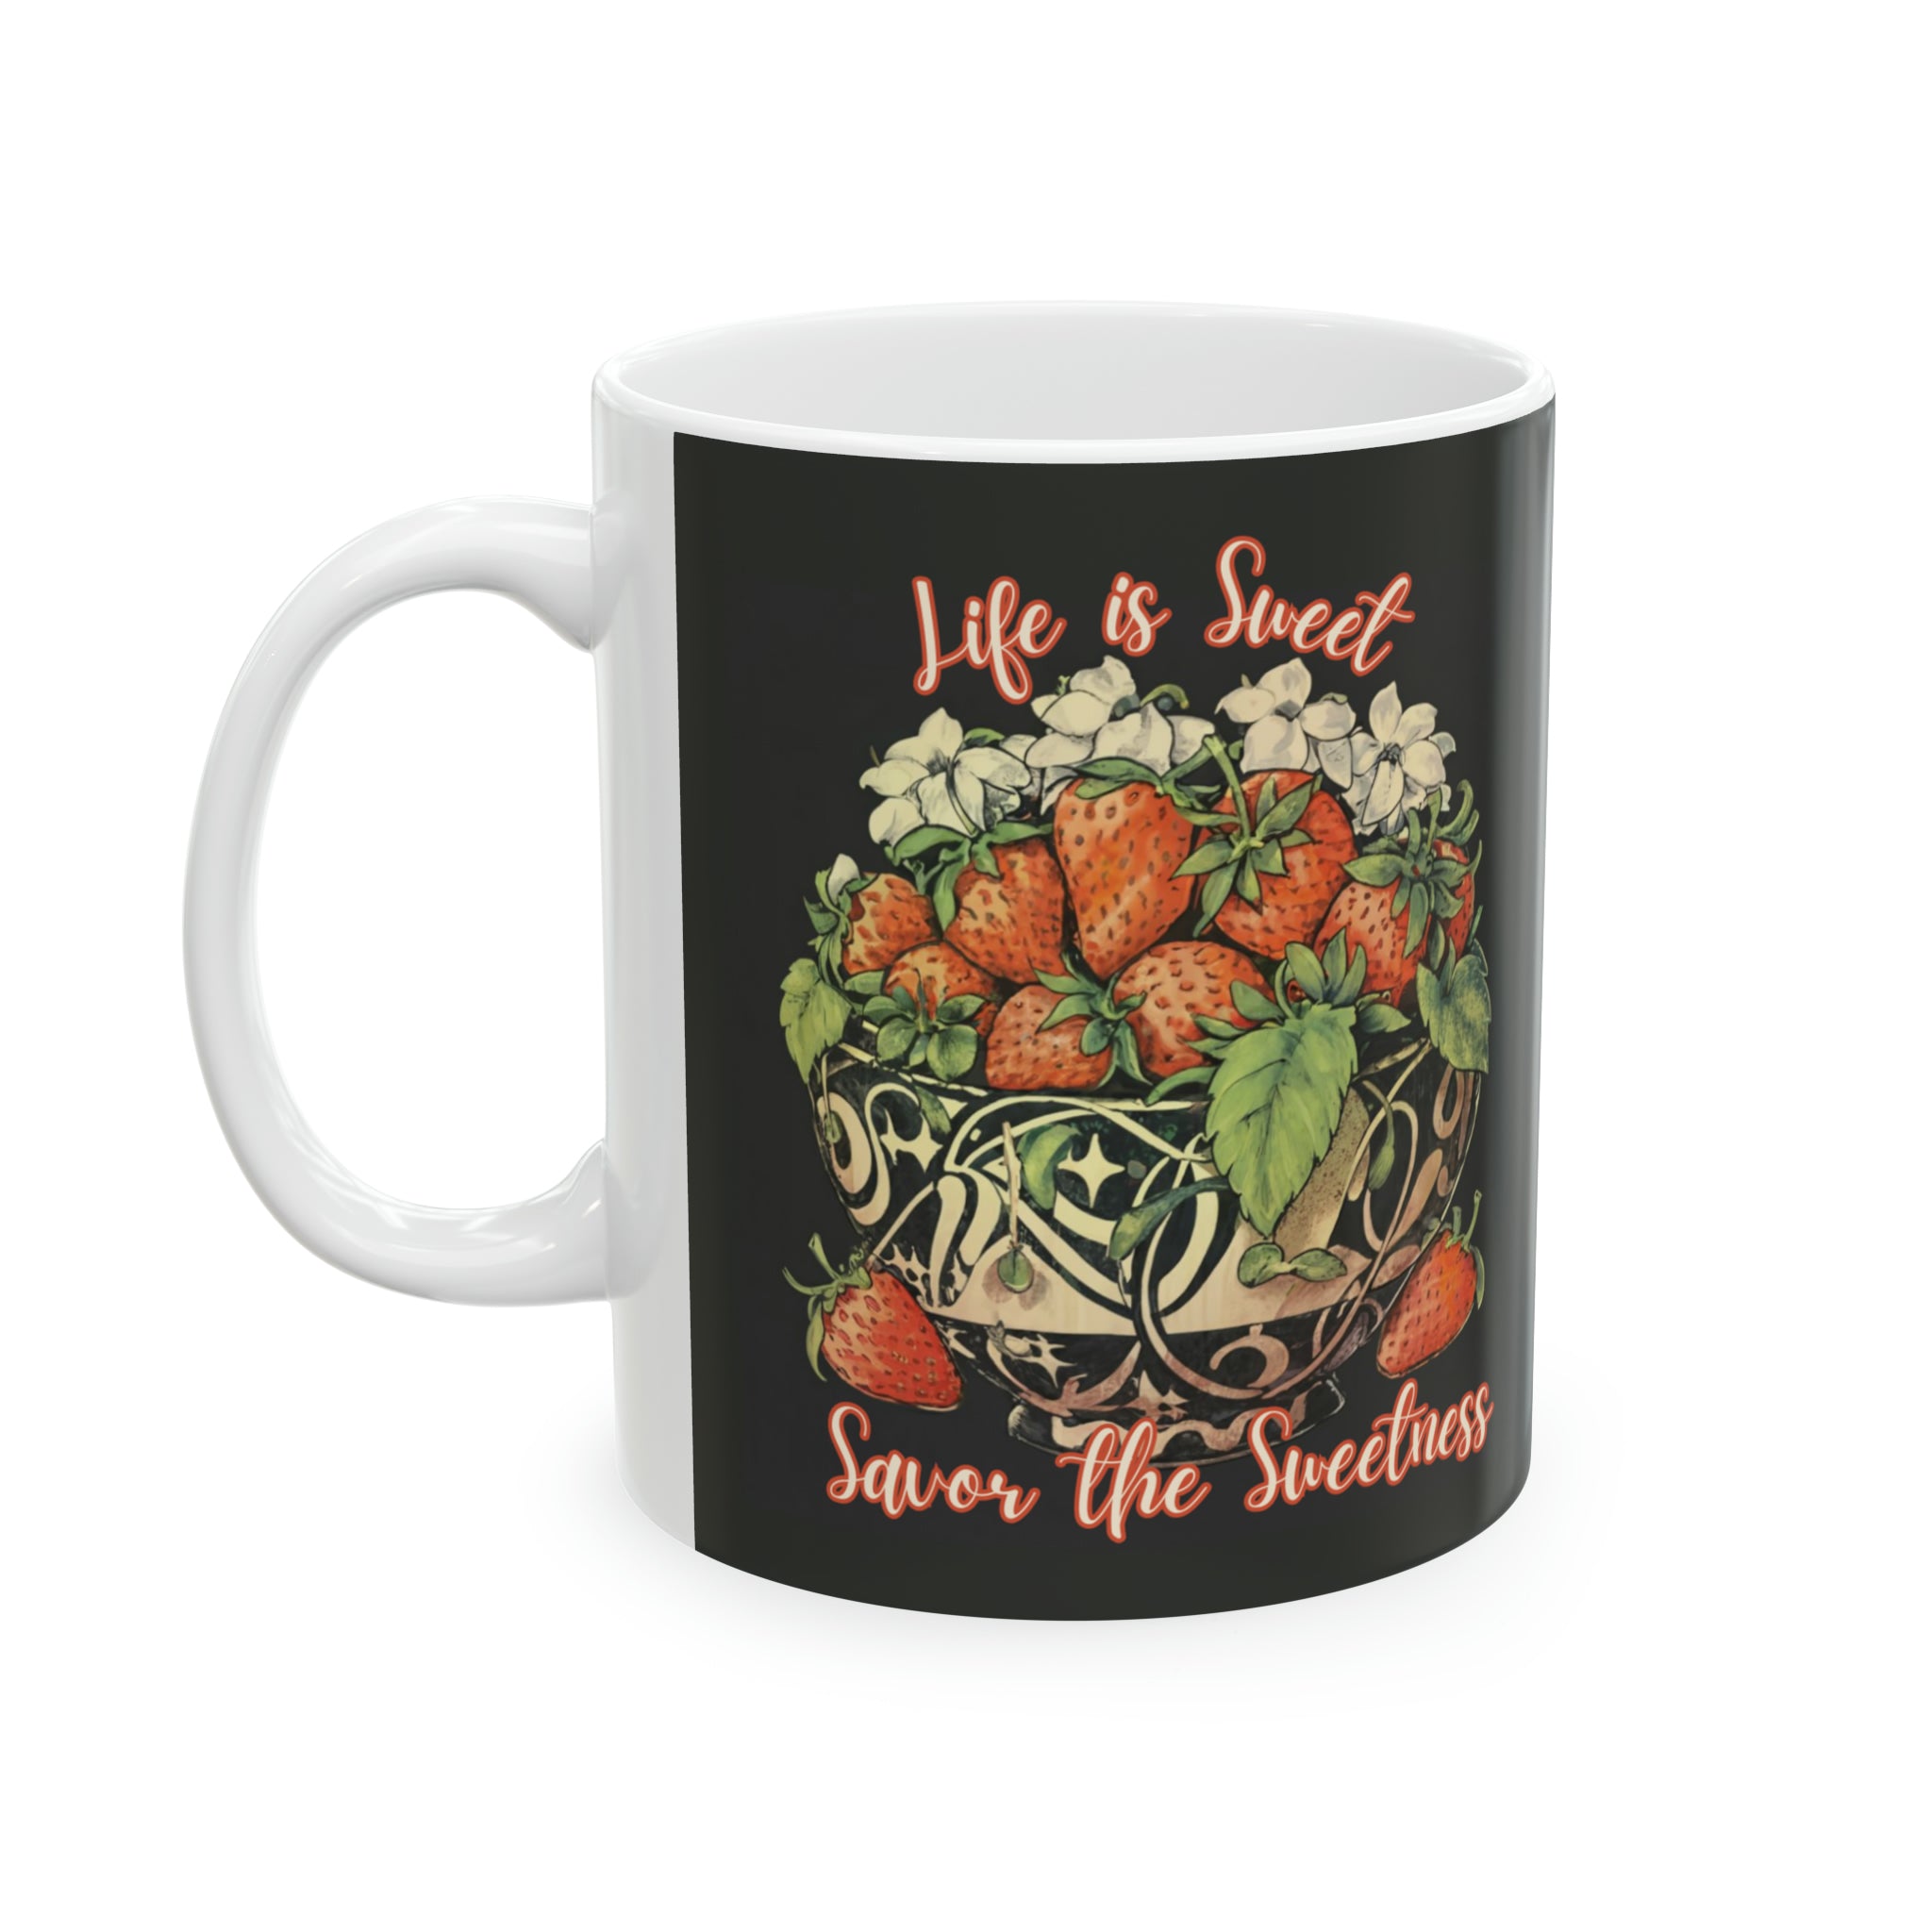 Life is sweet, Savor the Sweetness - Ceramic Mug, 11oz